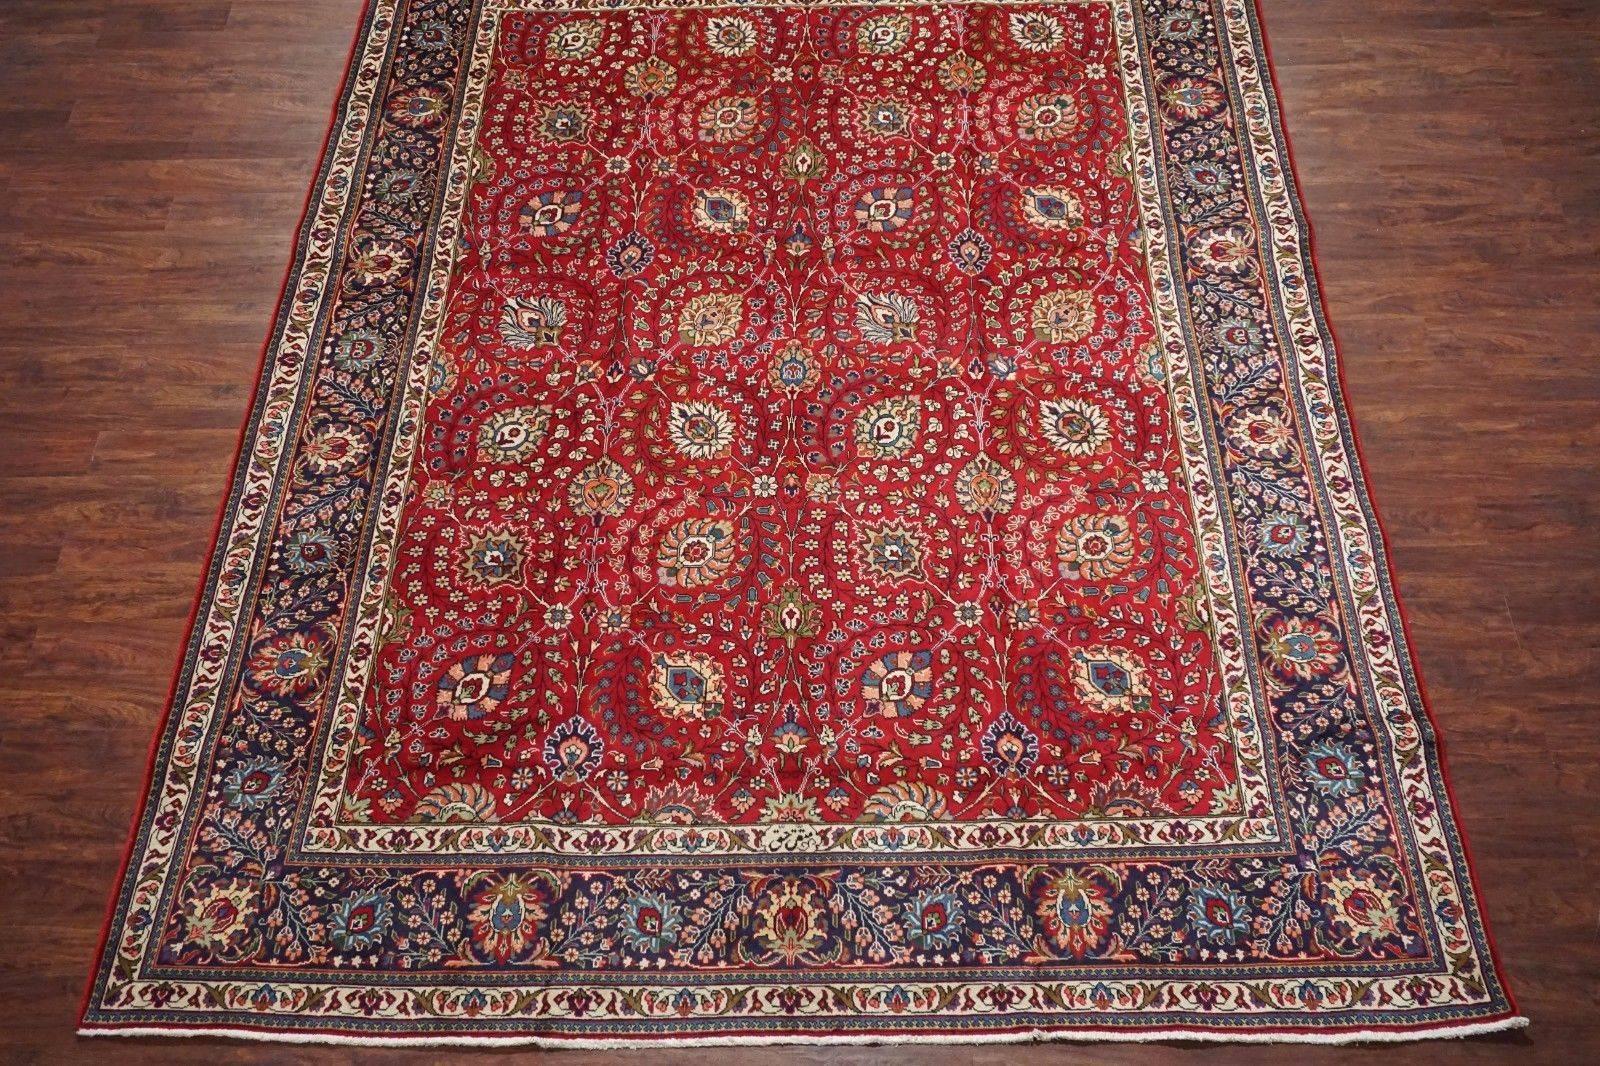 Signed Persian Tabriz Area rug

circa 1940

Measures: 9' 10